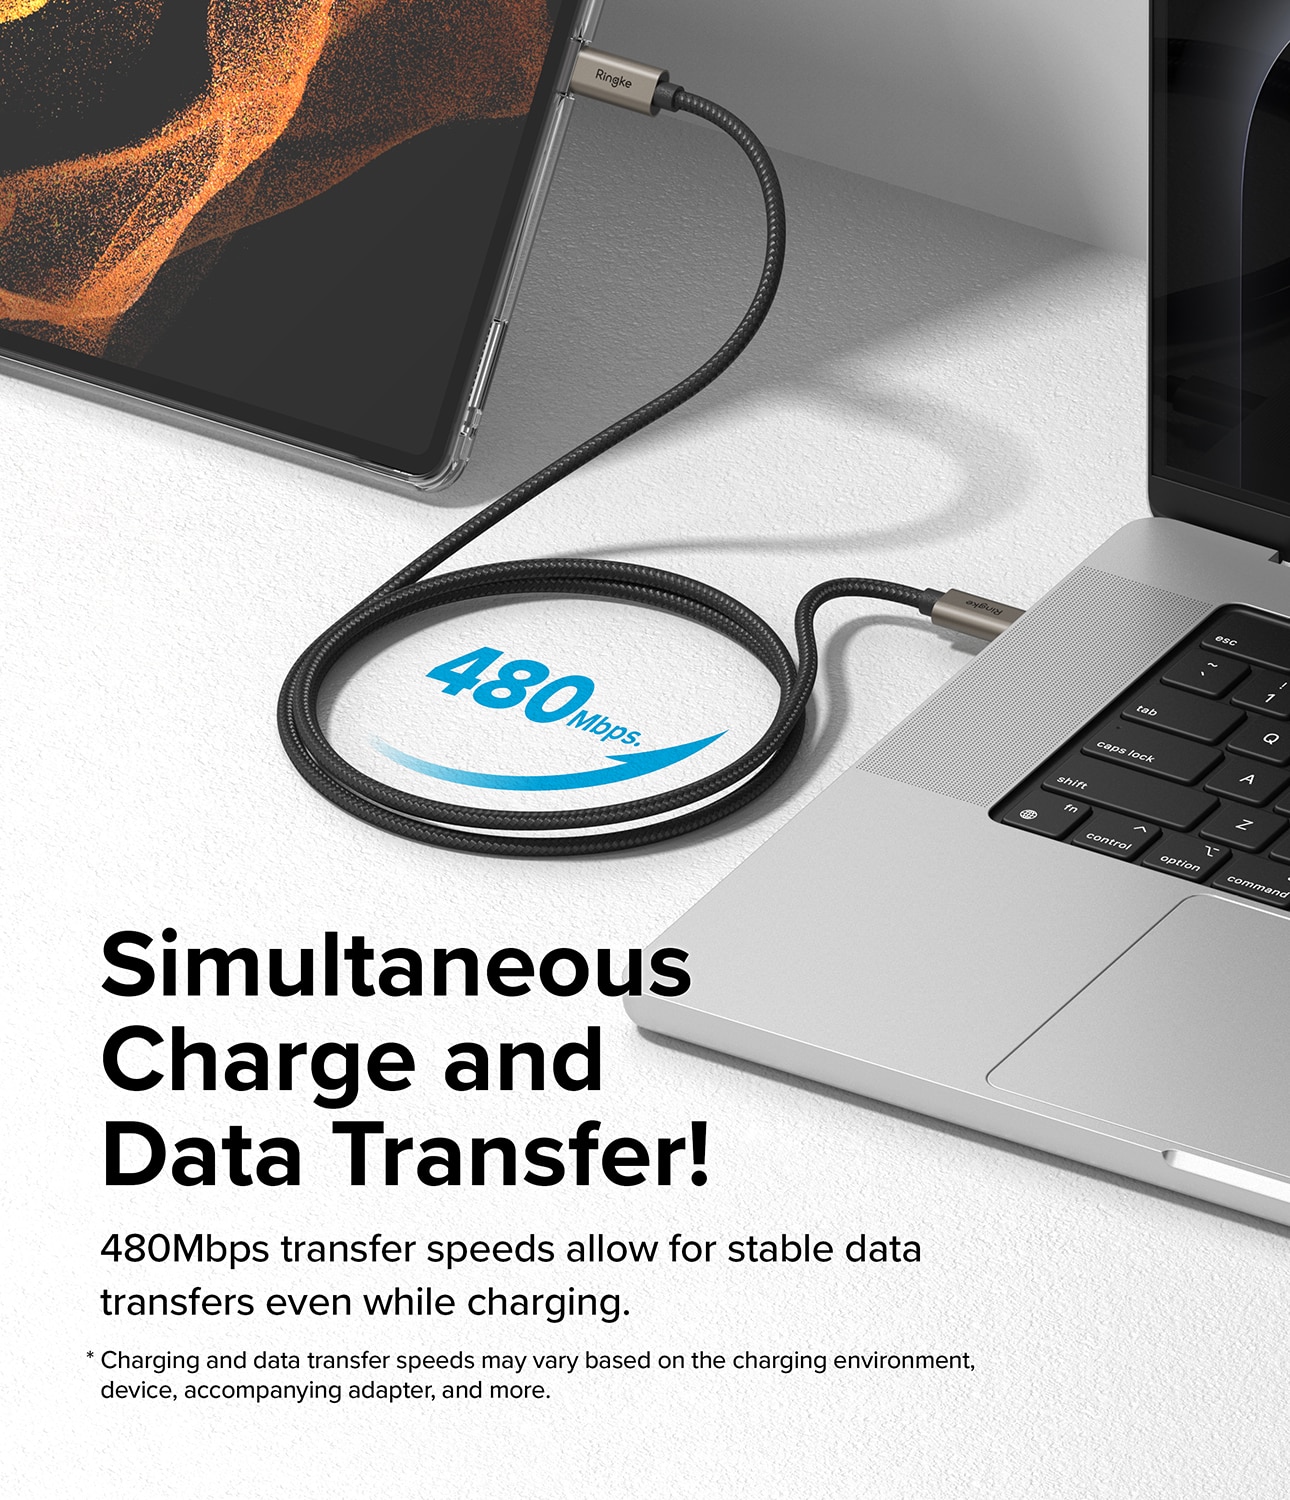 Fast Charging Basic Kabel USB-C -> USB-C 1m sort